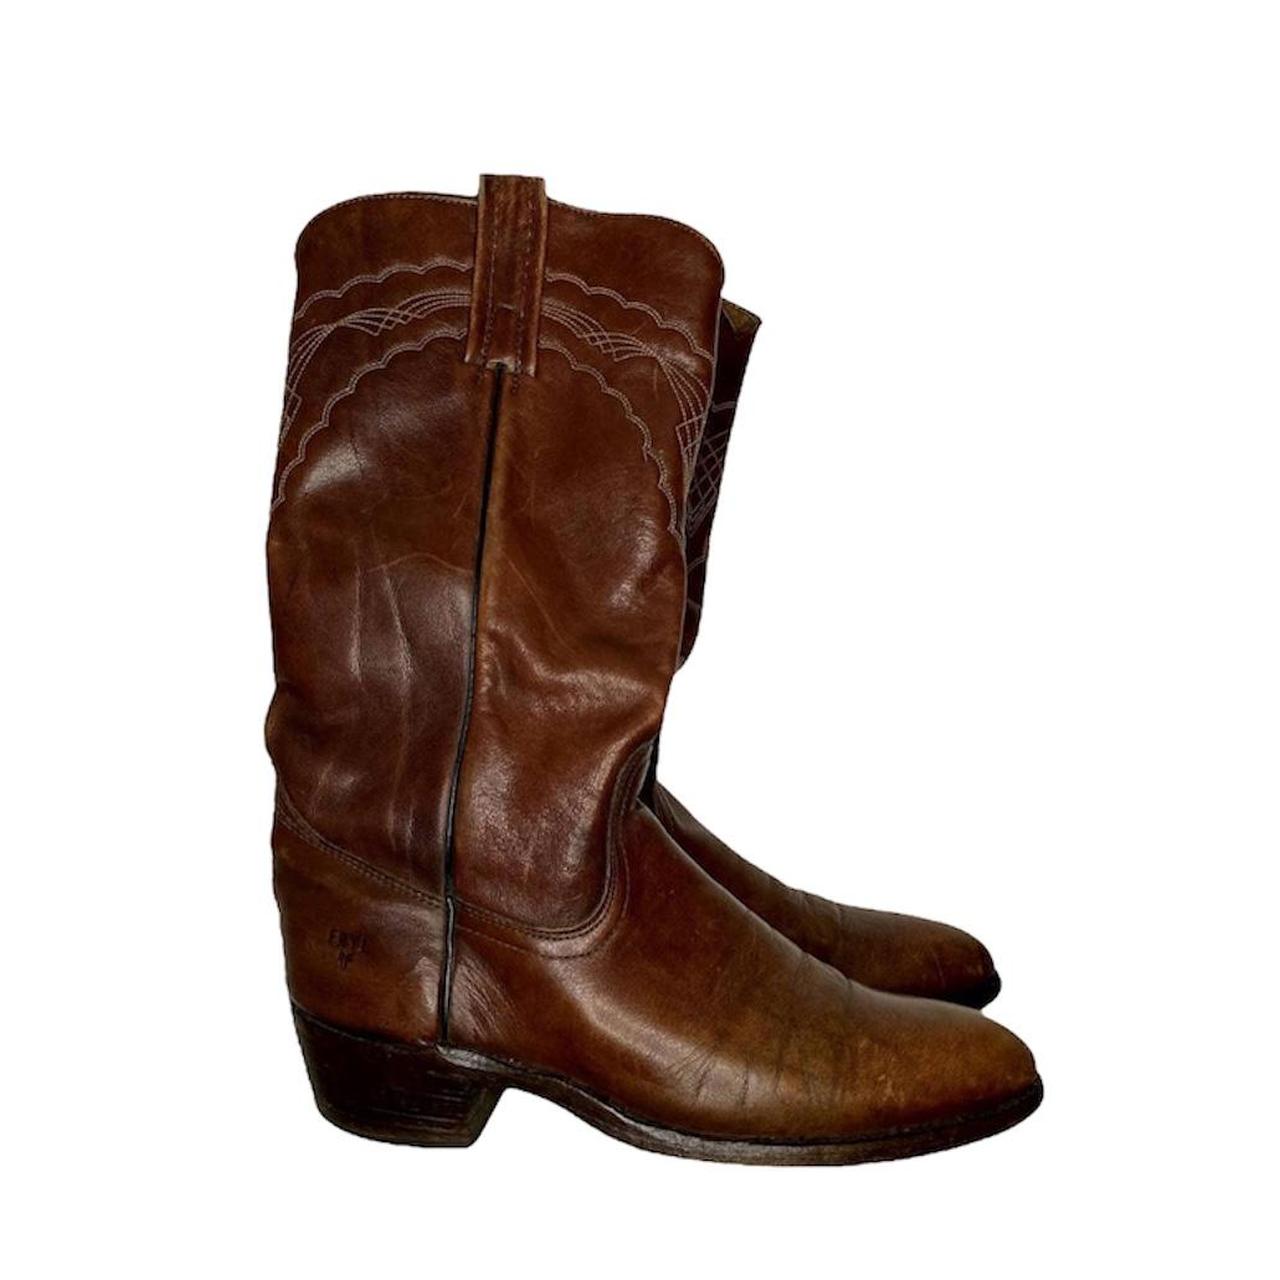 Frye Medium Brown Cowboy Boots with Contrast Stitch... - Depop